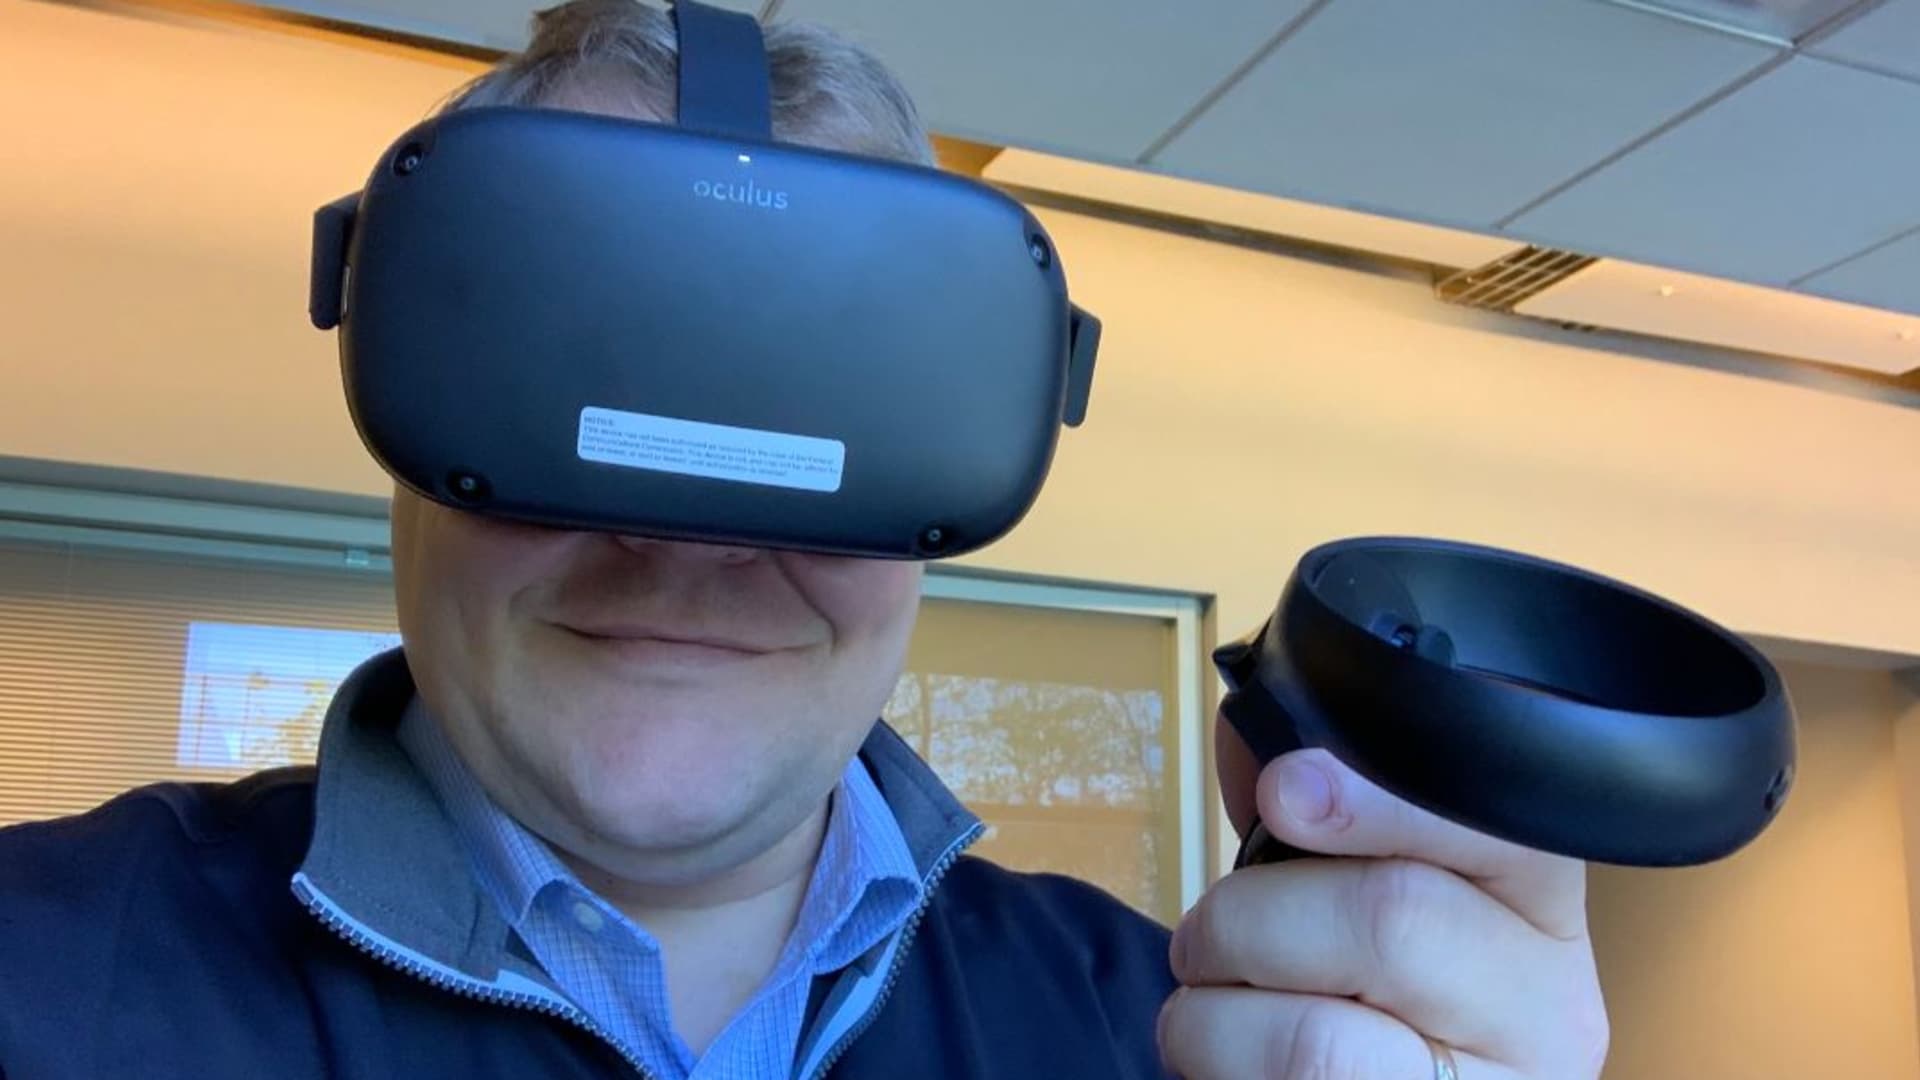 Meta to debut new VR headset in October, Mark Zuckerberg tells Joe Rogan